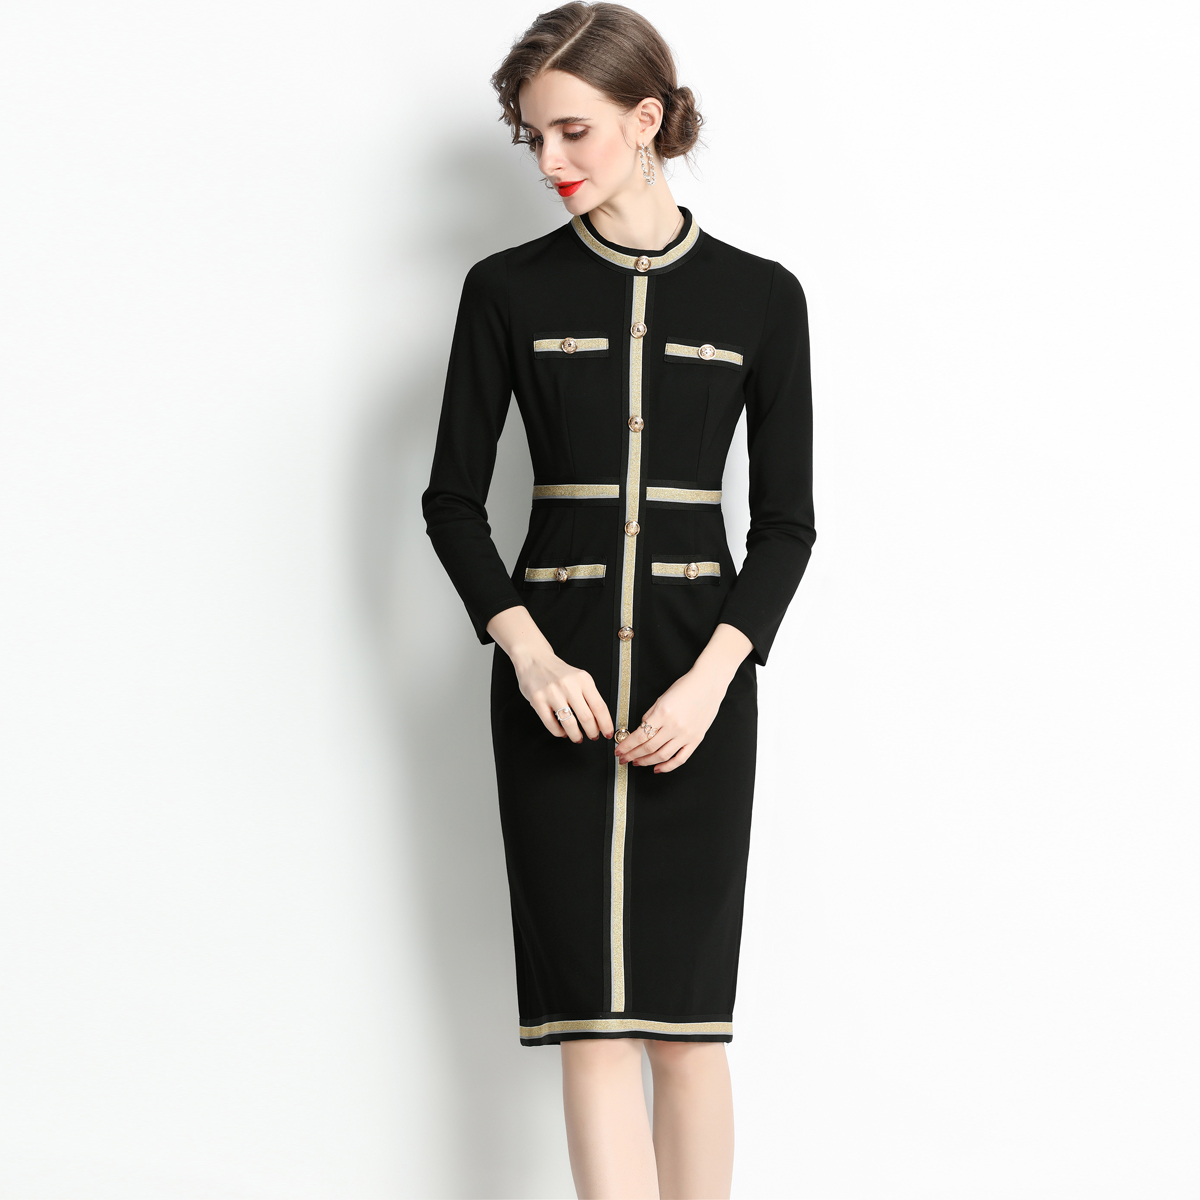 Cotton France style black rome fashion and elegant dress